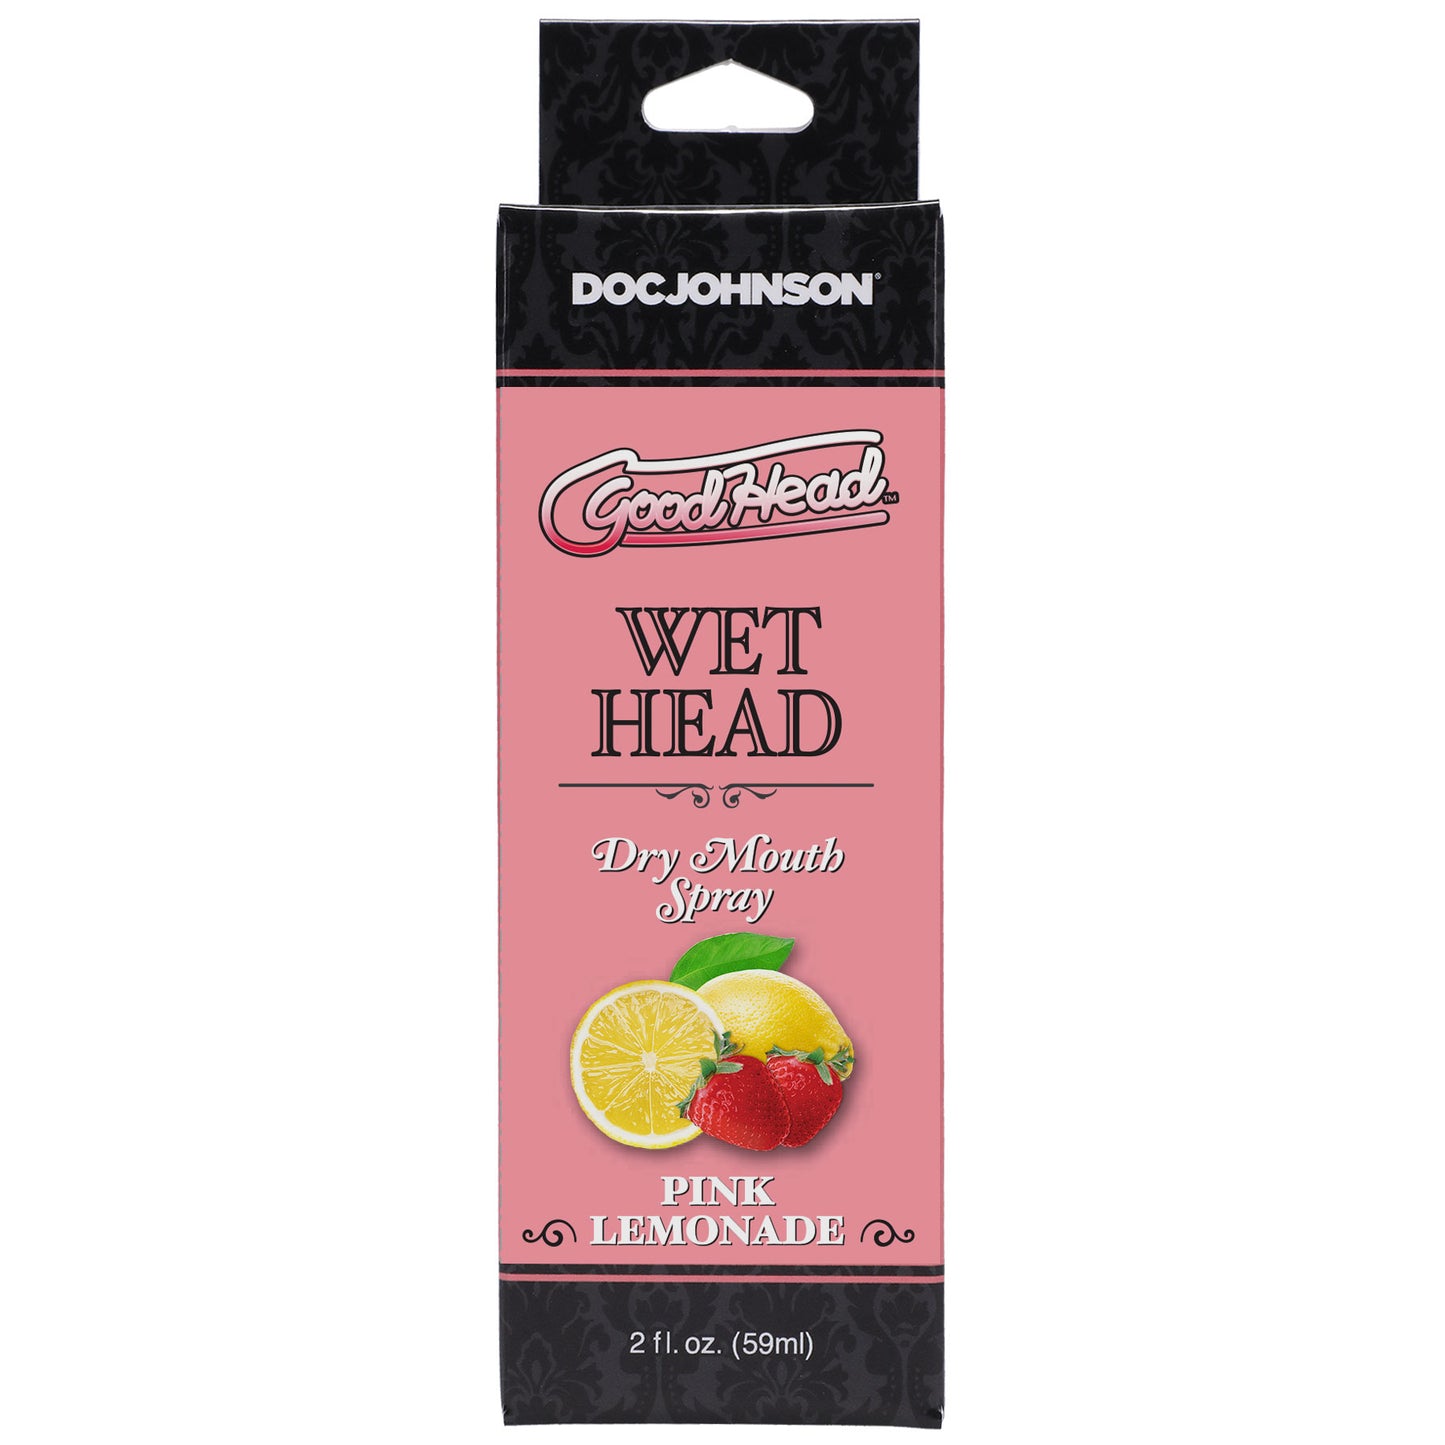 Goodhead - Wet Head - Dry Mouth Spray - Pink  Lemonade - 2 Fl. Oz. (59ml) DJ1361-20-BX